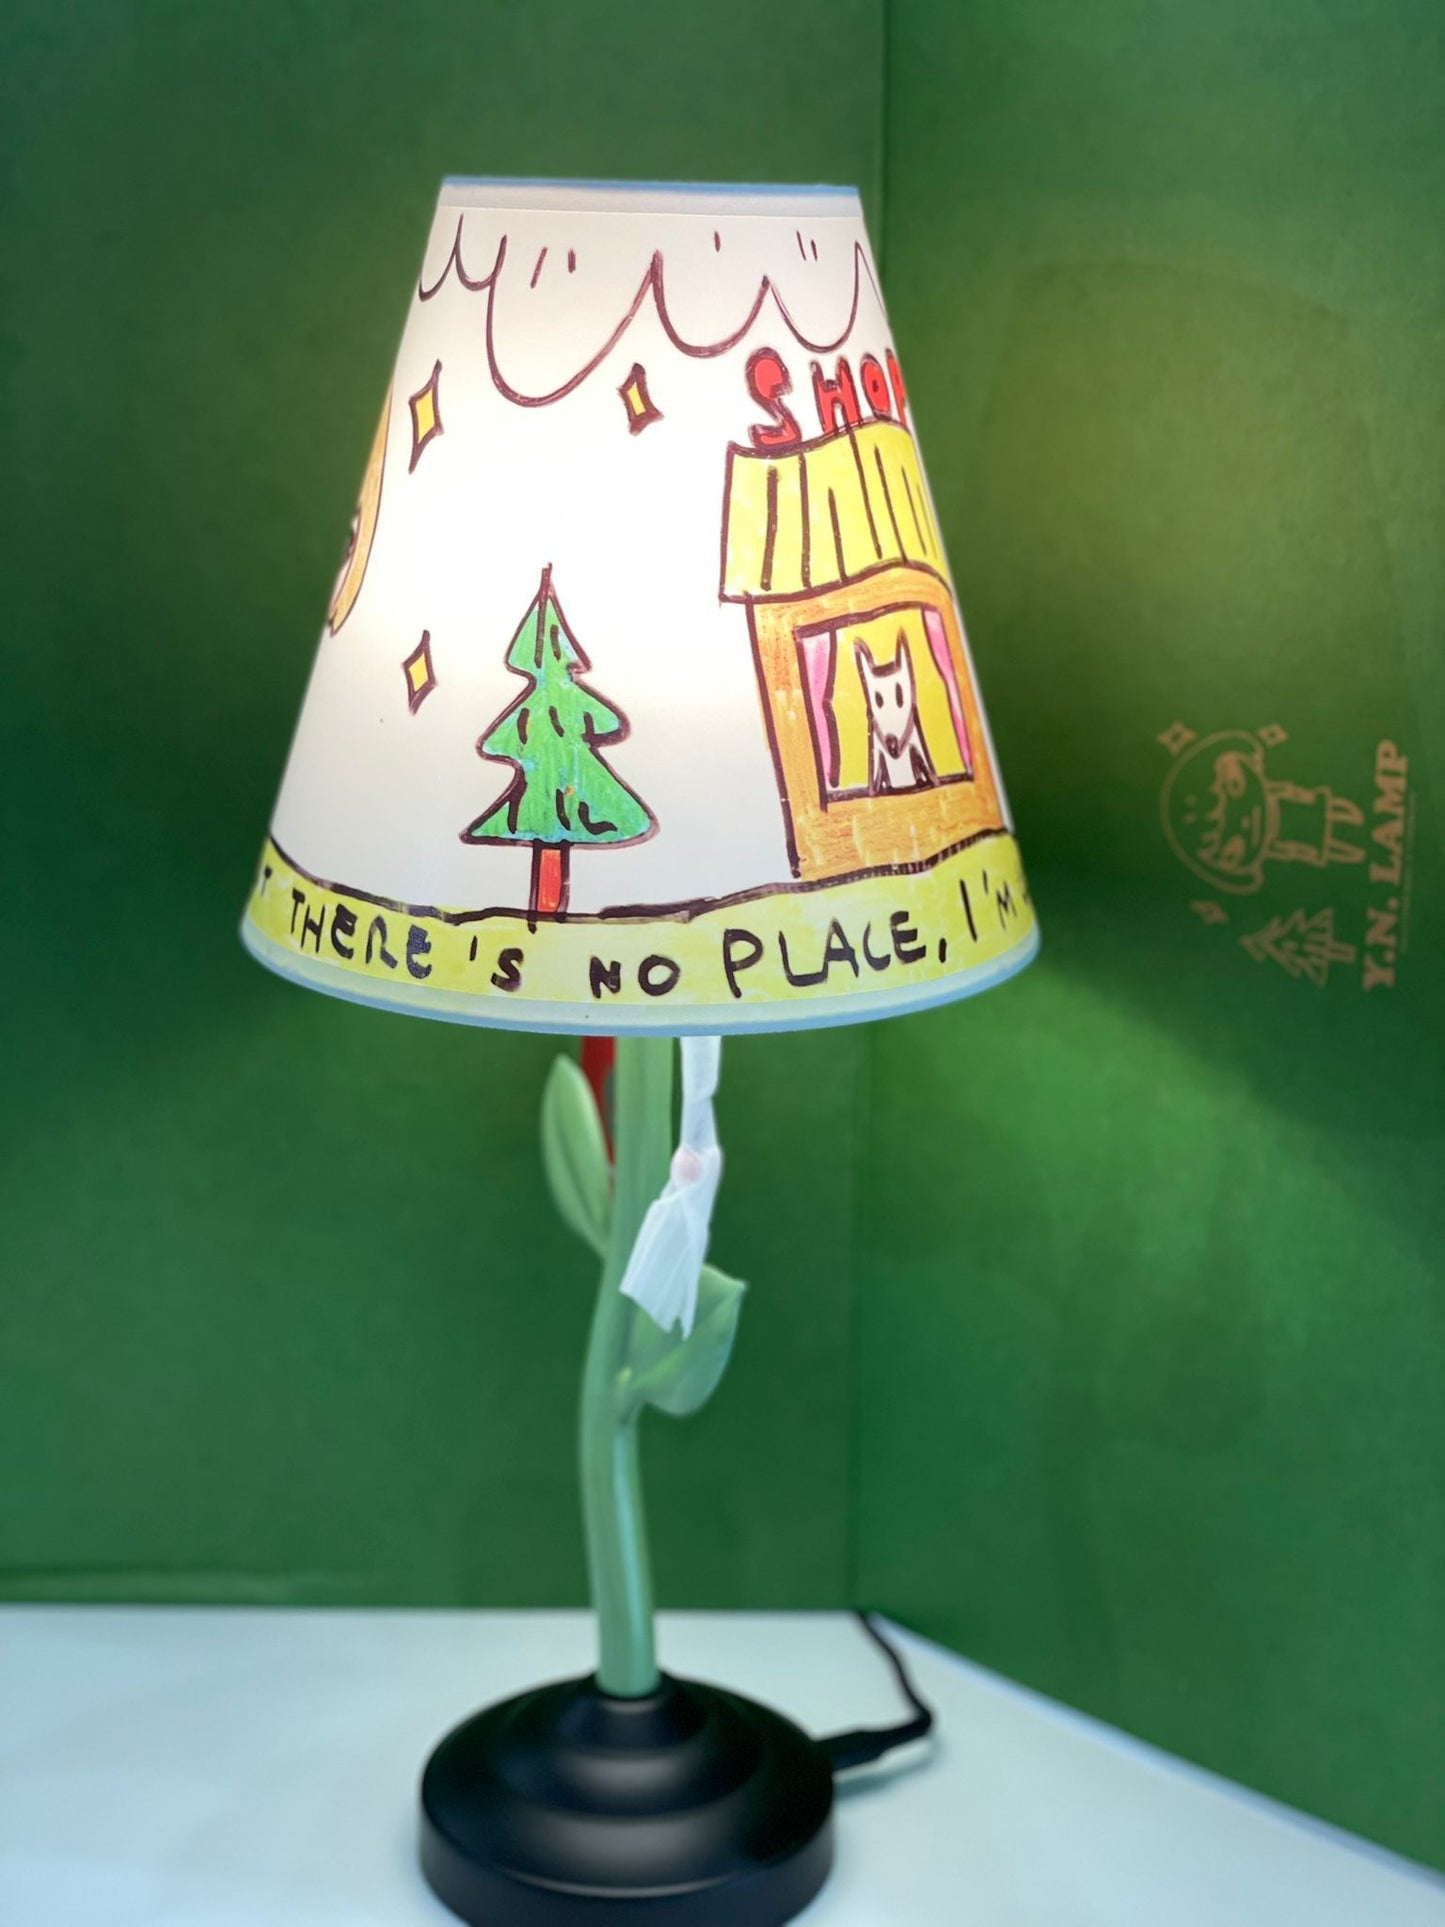 Y.N. LAMP by Yoshitomo Nara